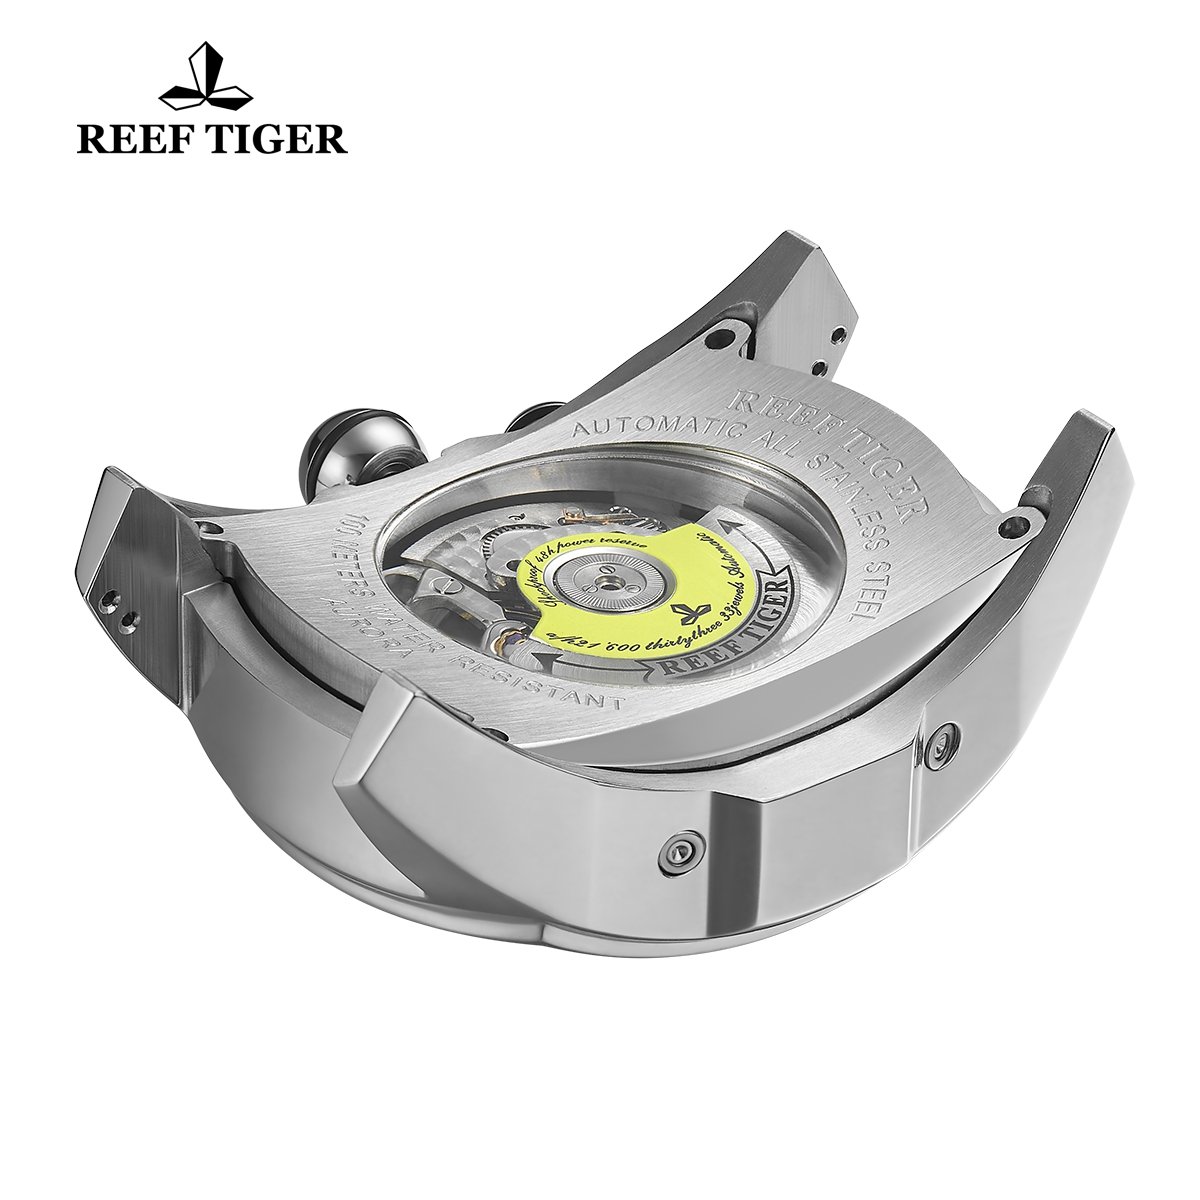 REEF TIGER Luminous Huge Big Sport Watch for Men Tourbillon Analog Automatic Watches Rubber Strap RGA3069